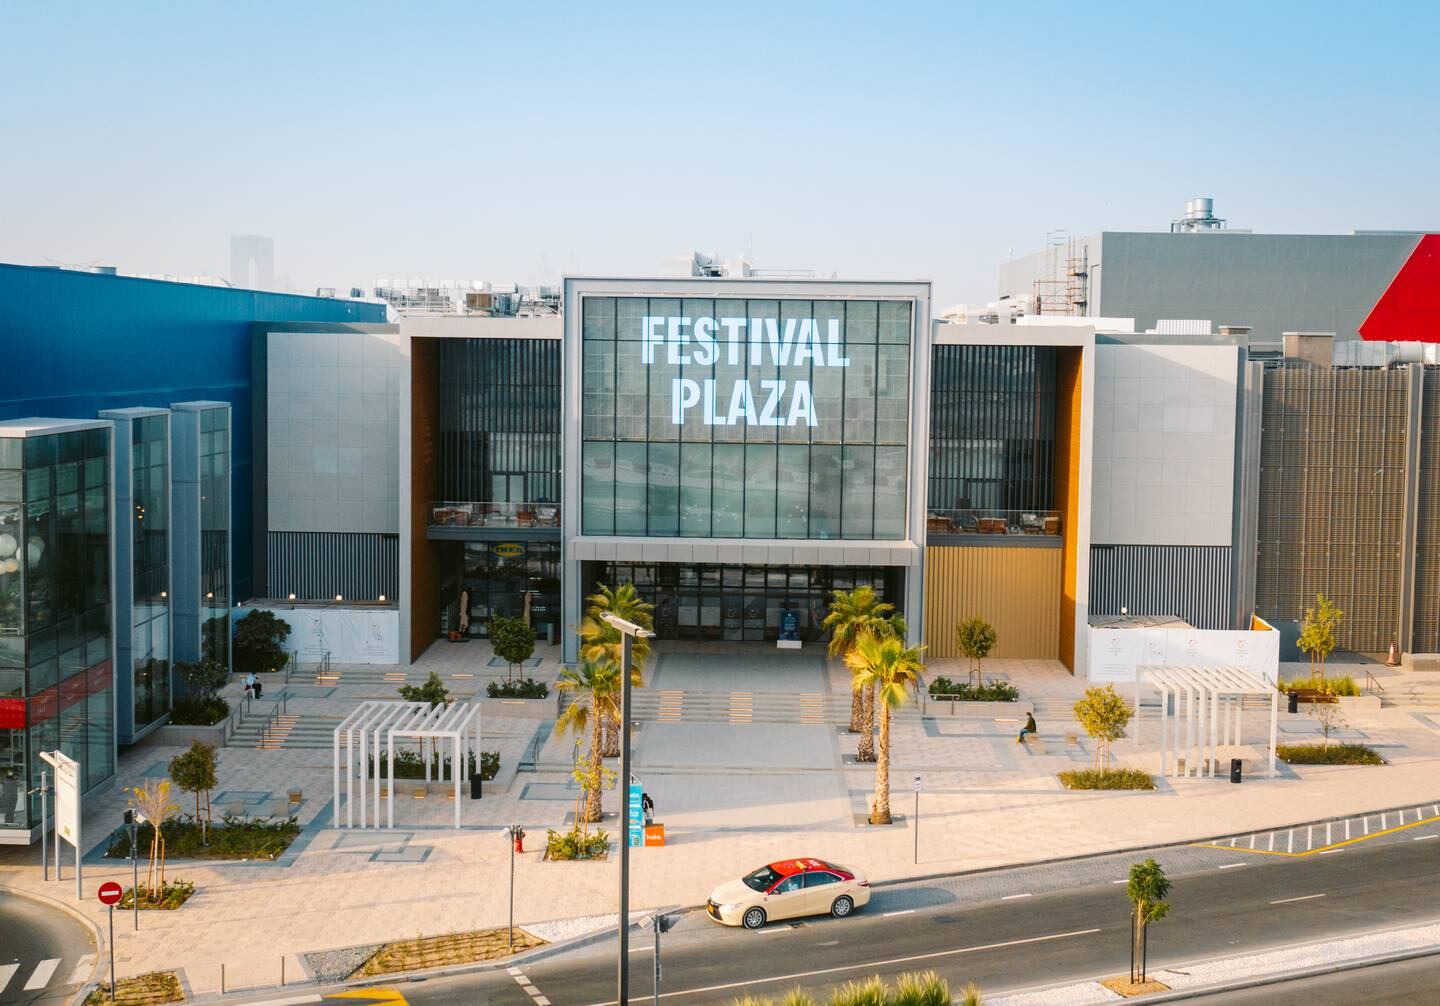 During Ramadan, Al-Futtaim Malls is emphasising F&B experiences and more value-added promotions, such as cashback deals at Dubai’s Festival Plaza. Photo: Al-Futtaim Malls